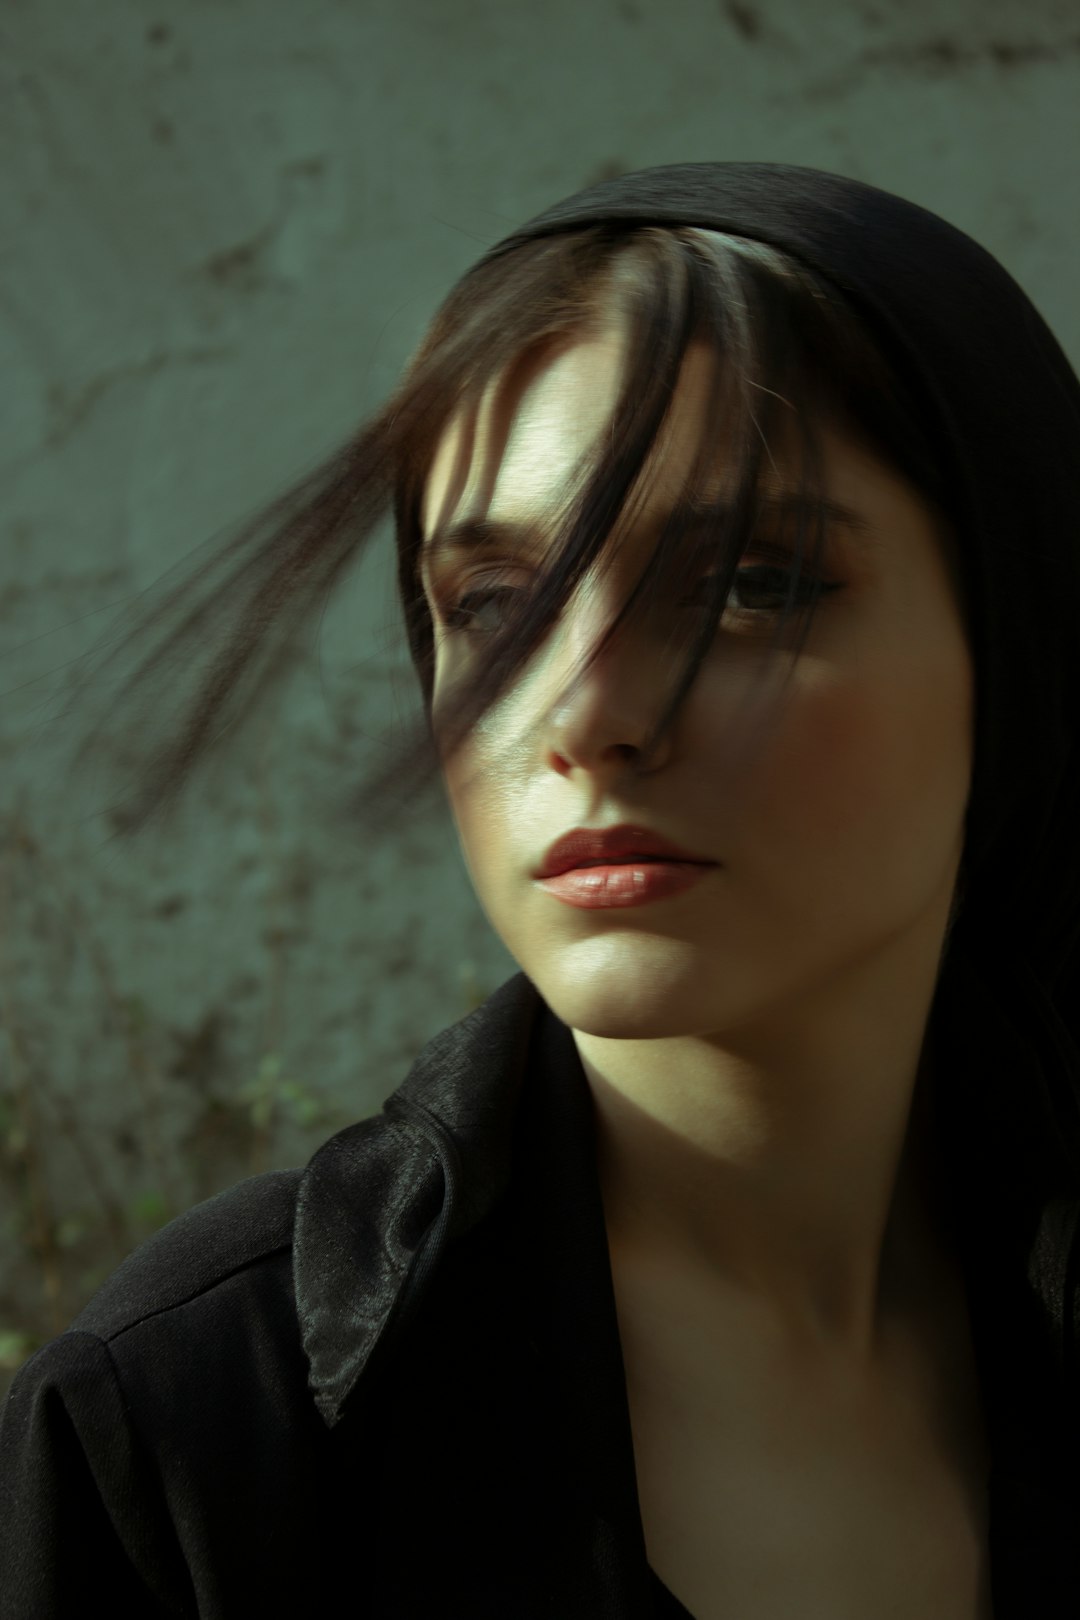 woman in black coat with black hair